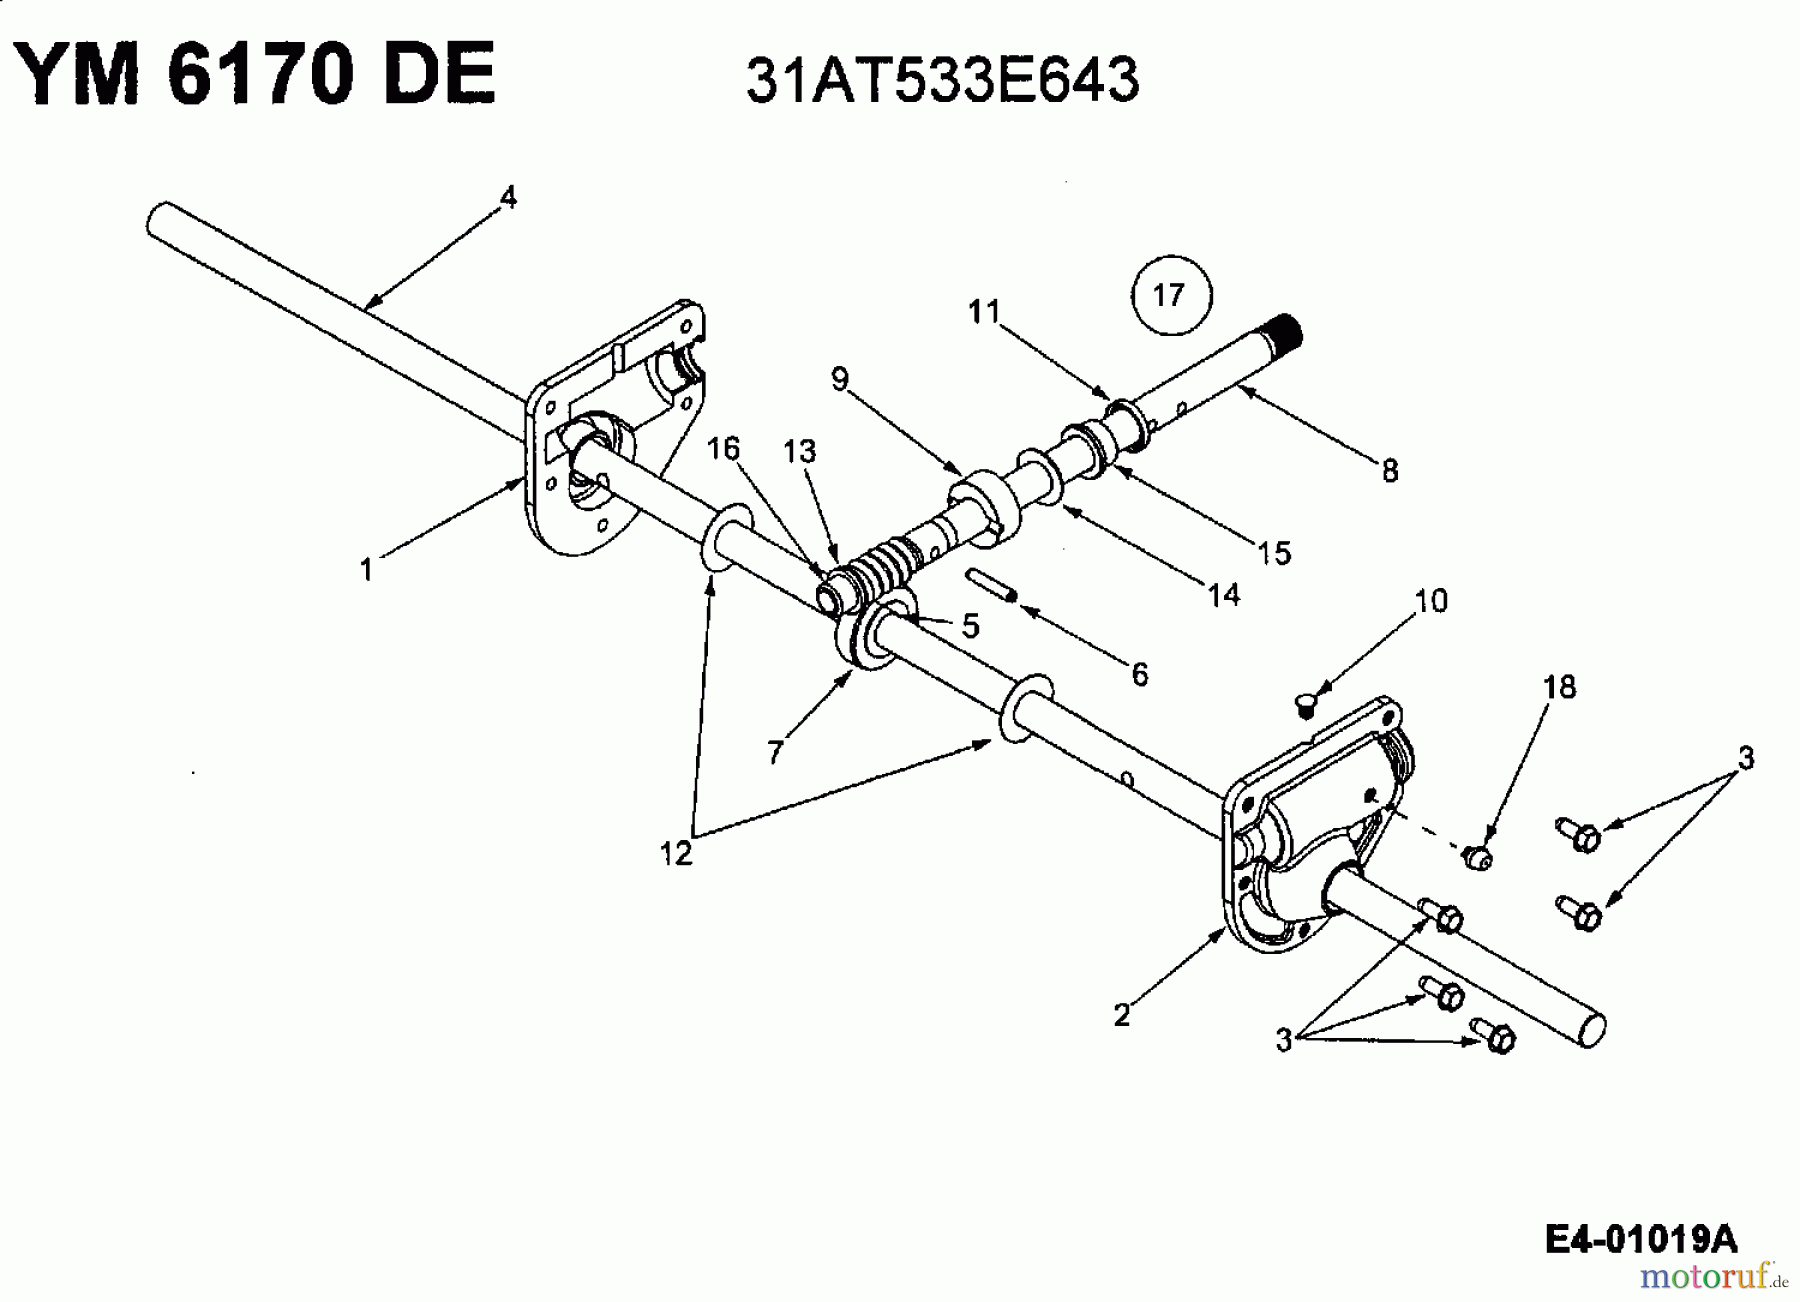  Yard-Man Schneefräsen E 533 E 31AE533E643  (1999) Schneckengetriebe